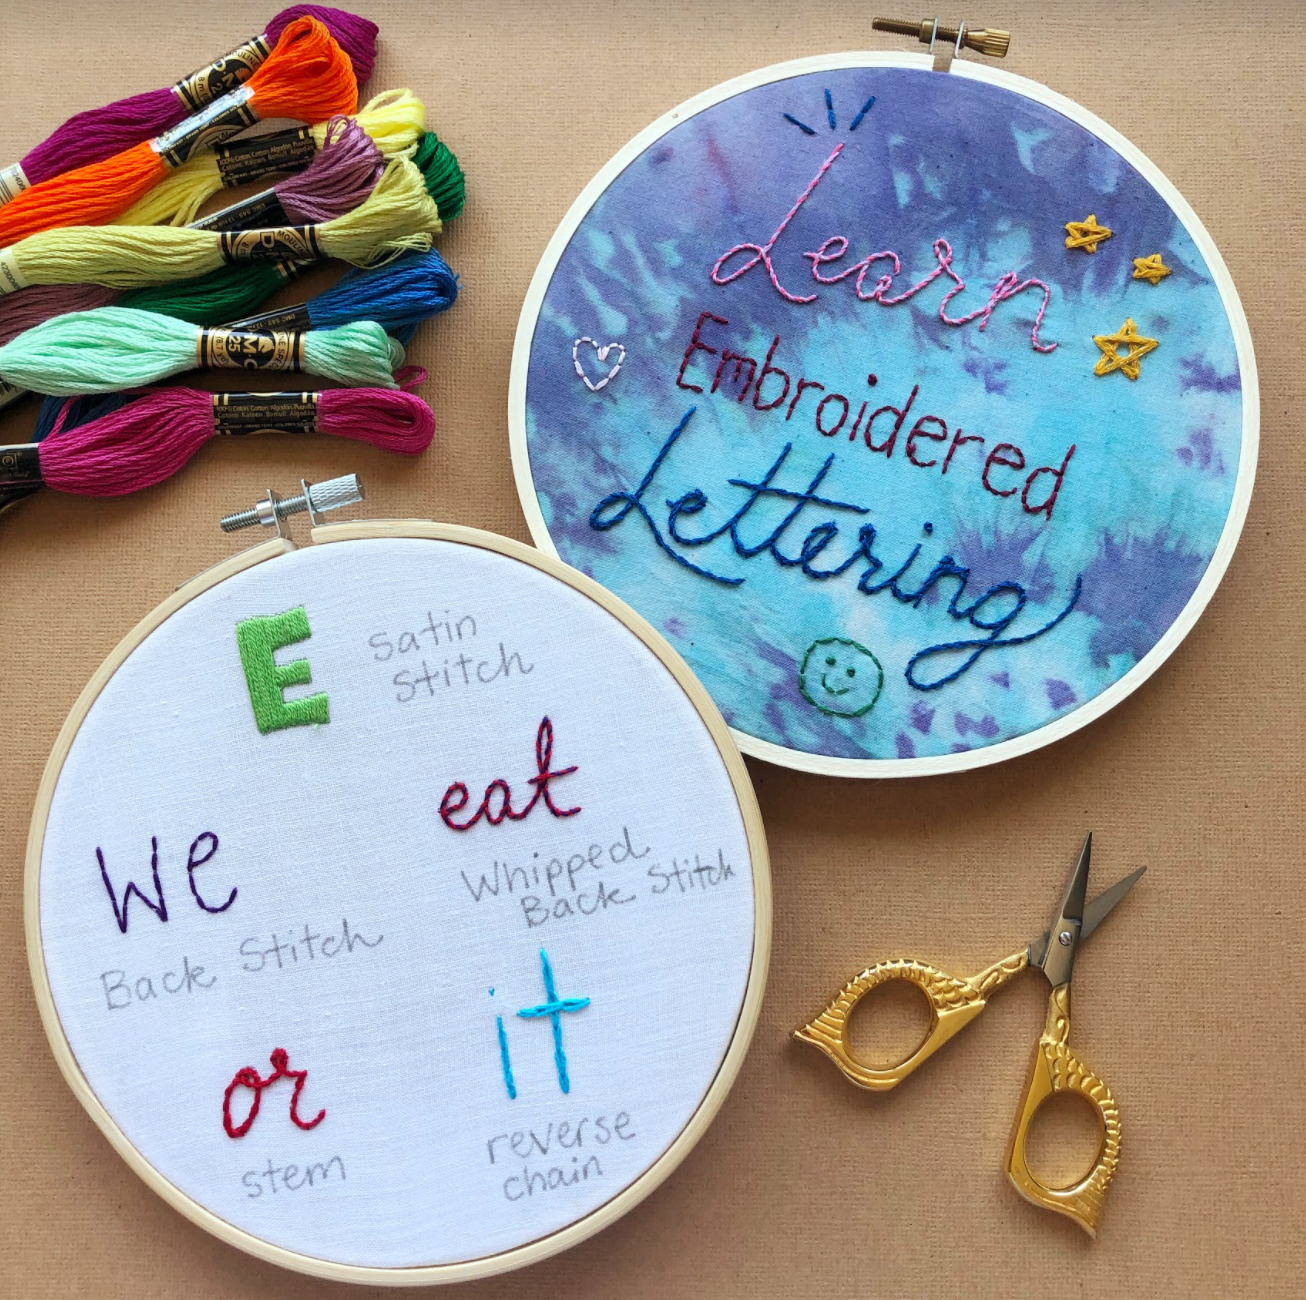 10 Plastic Embroidery Hoop - Magic Hour Needlecrafts